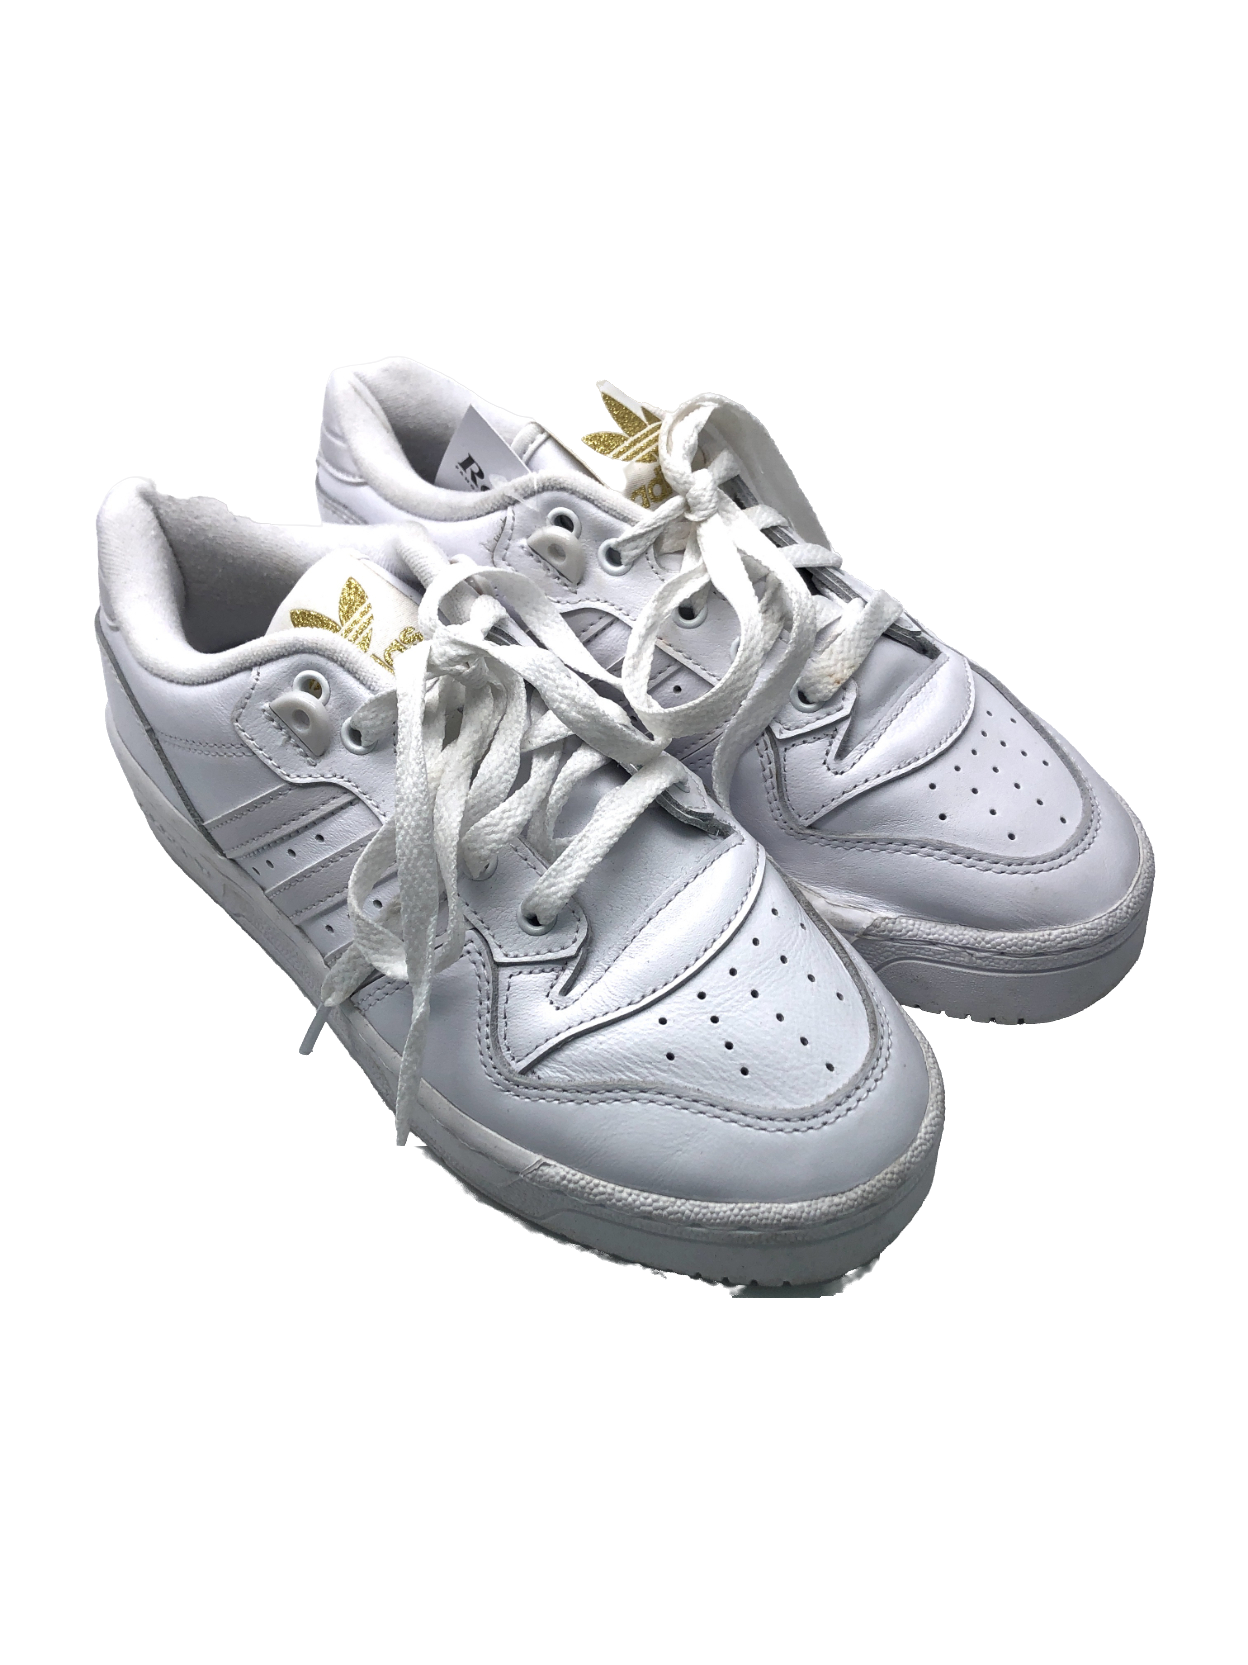 adidas White Original Rivalry Low Sneakers UK 4.5 EU 37.5 👠